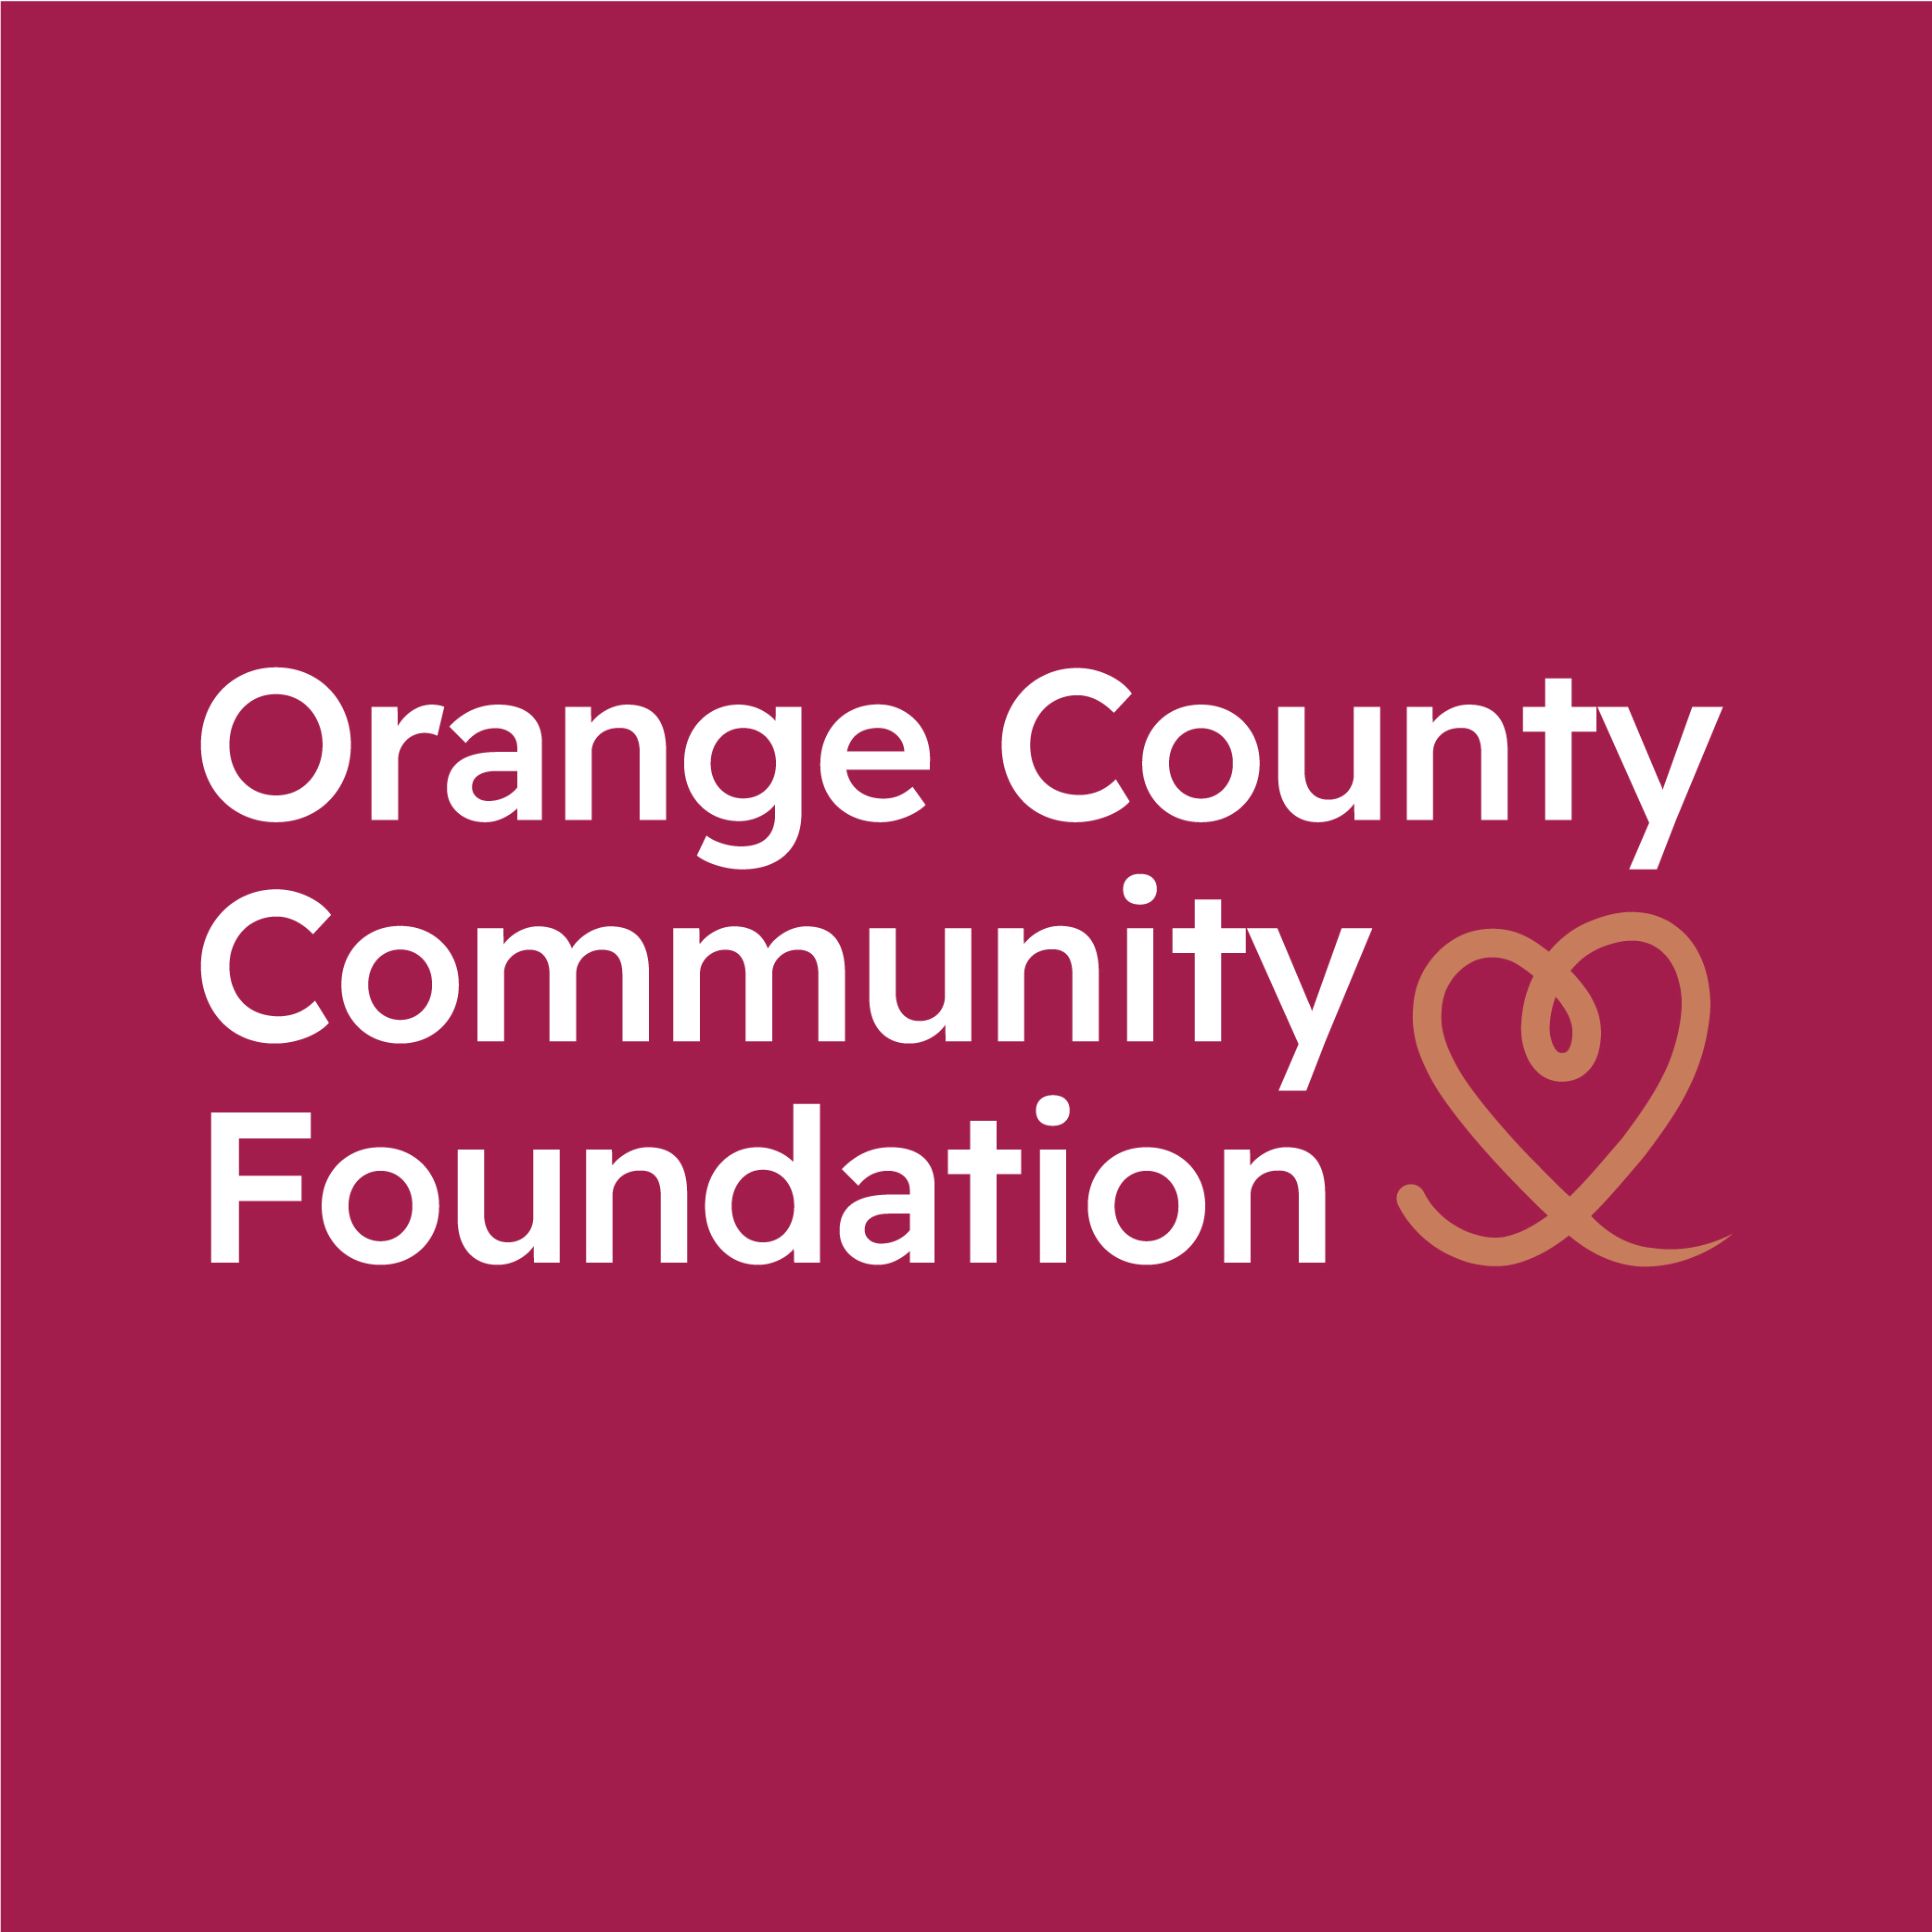 Orange County Community Foundation receives $500,000 to support their Workforce Development Initiative